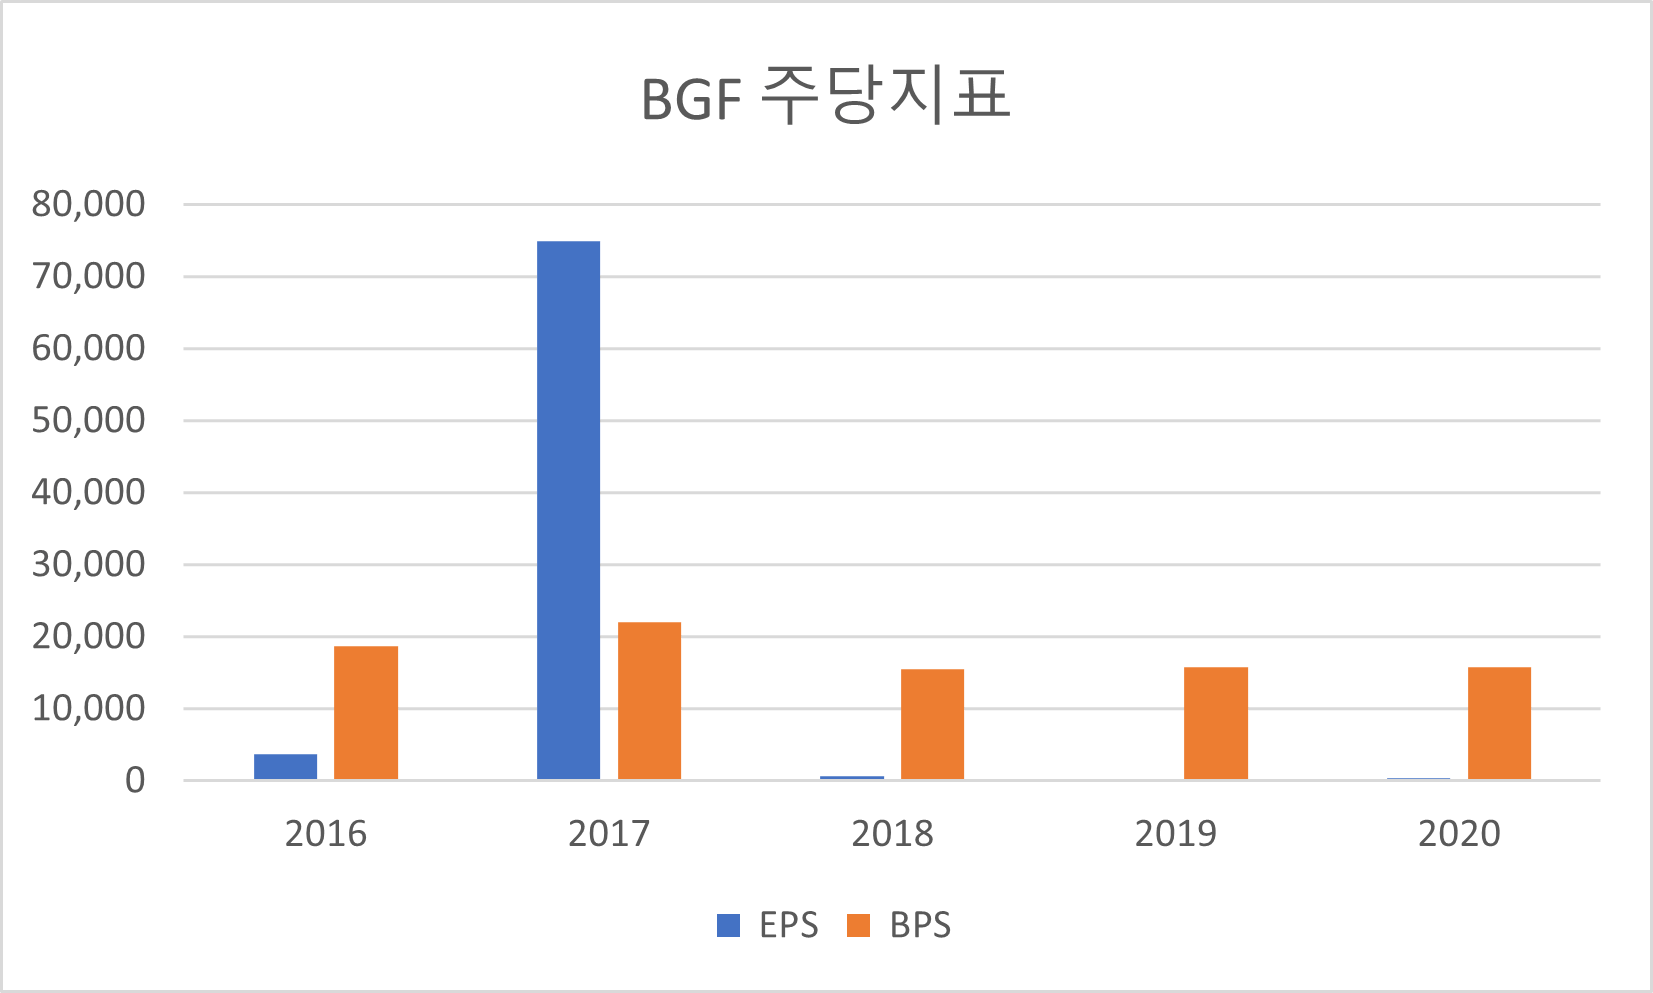 BGF 주당지표